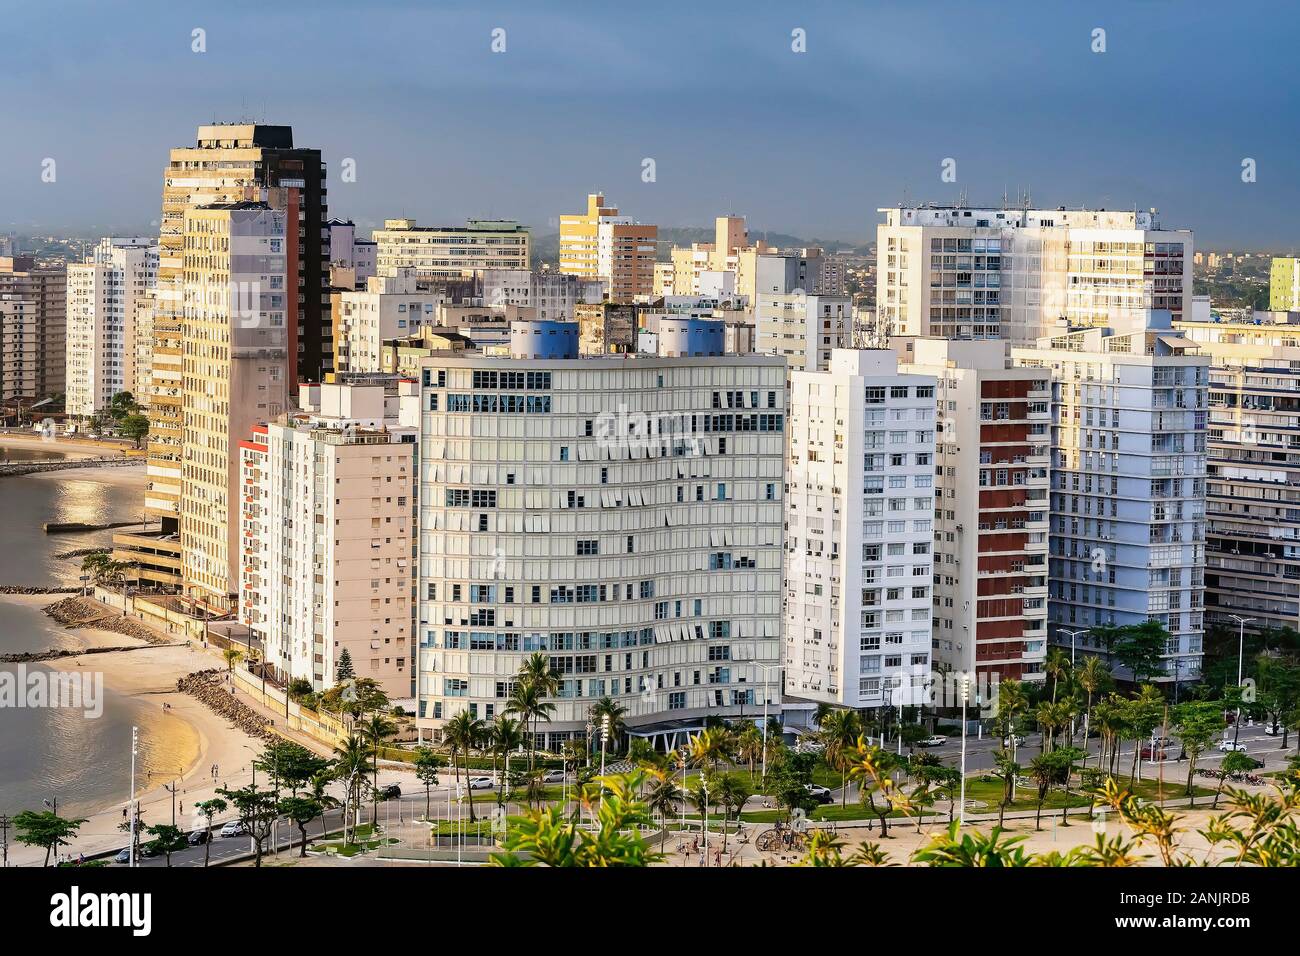 Sao Vicente - SP, Brazil - November 21, 2019: Aerial view of the beachfront buildings of Sao Vicente city, SP Brazil. Stock Photo